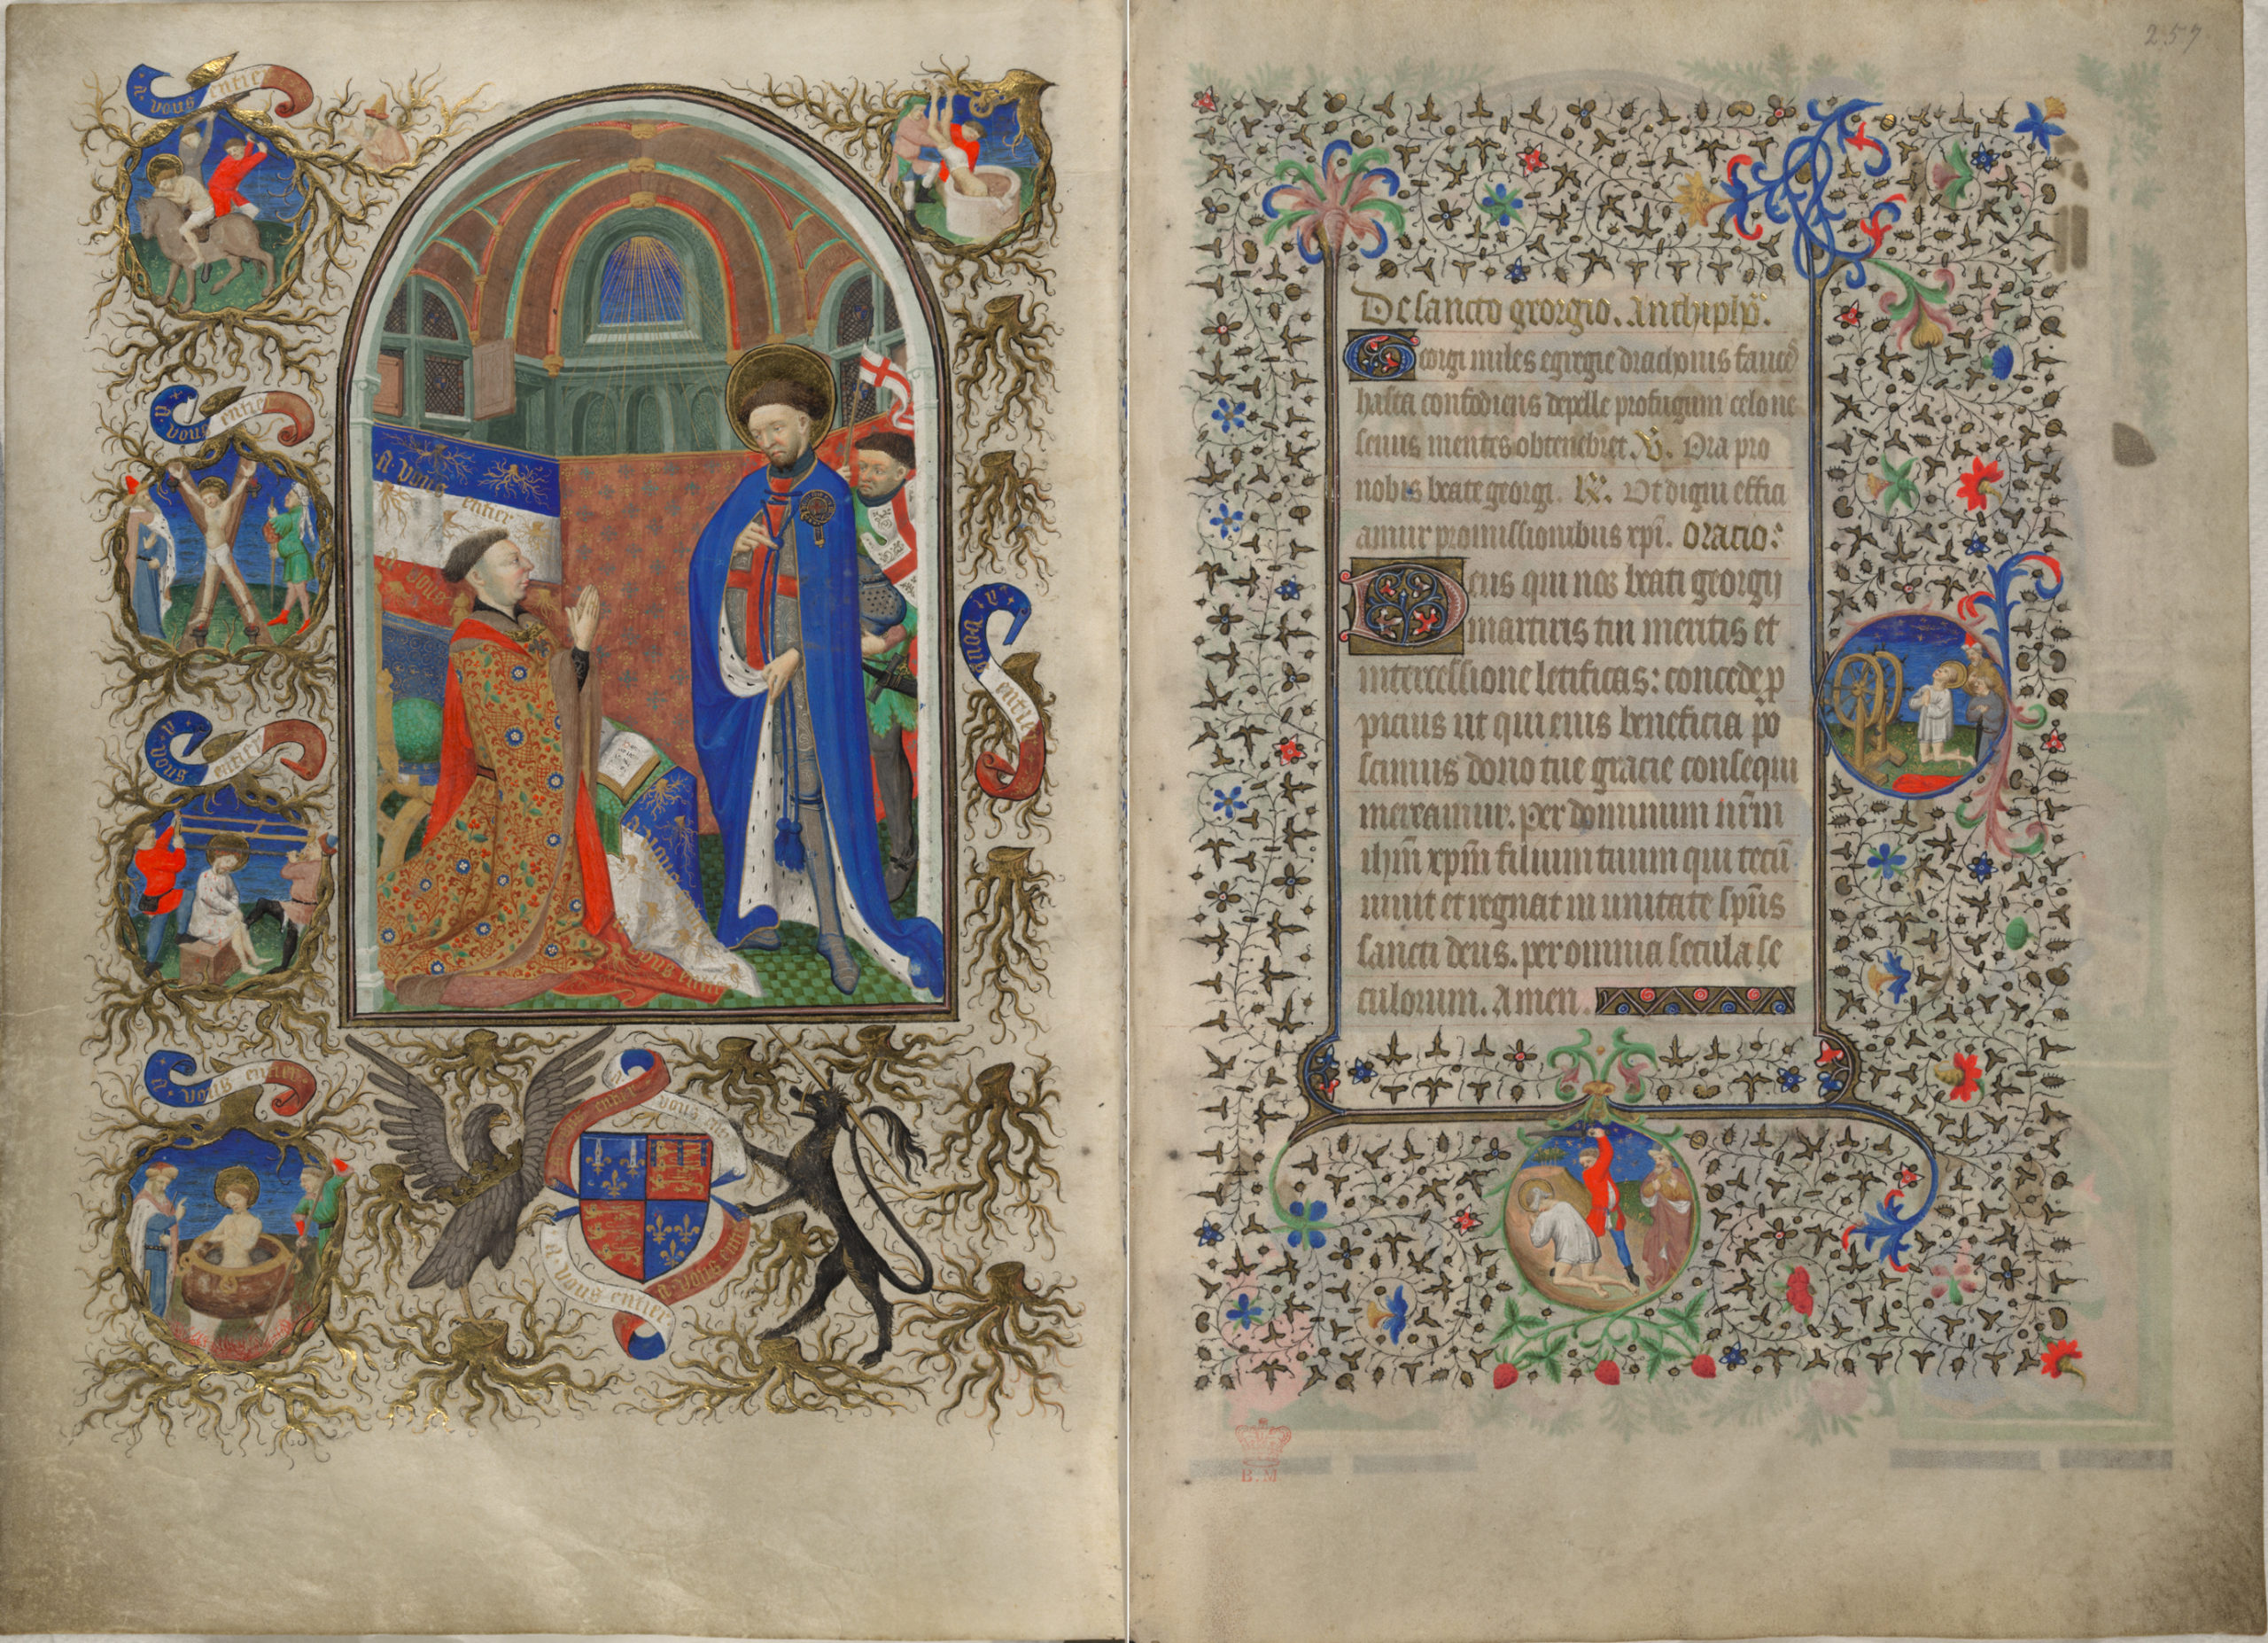 Small Medieval Journal Making Kit - Innovative Journaling